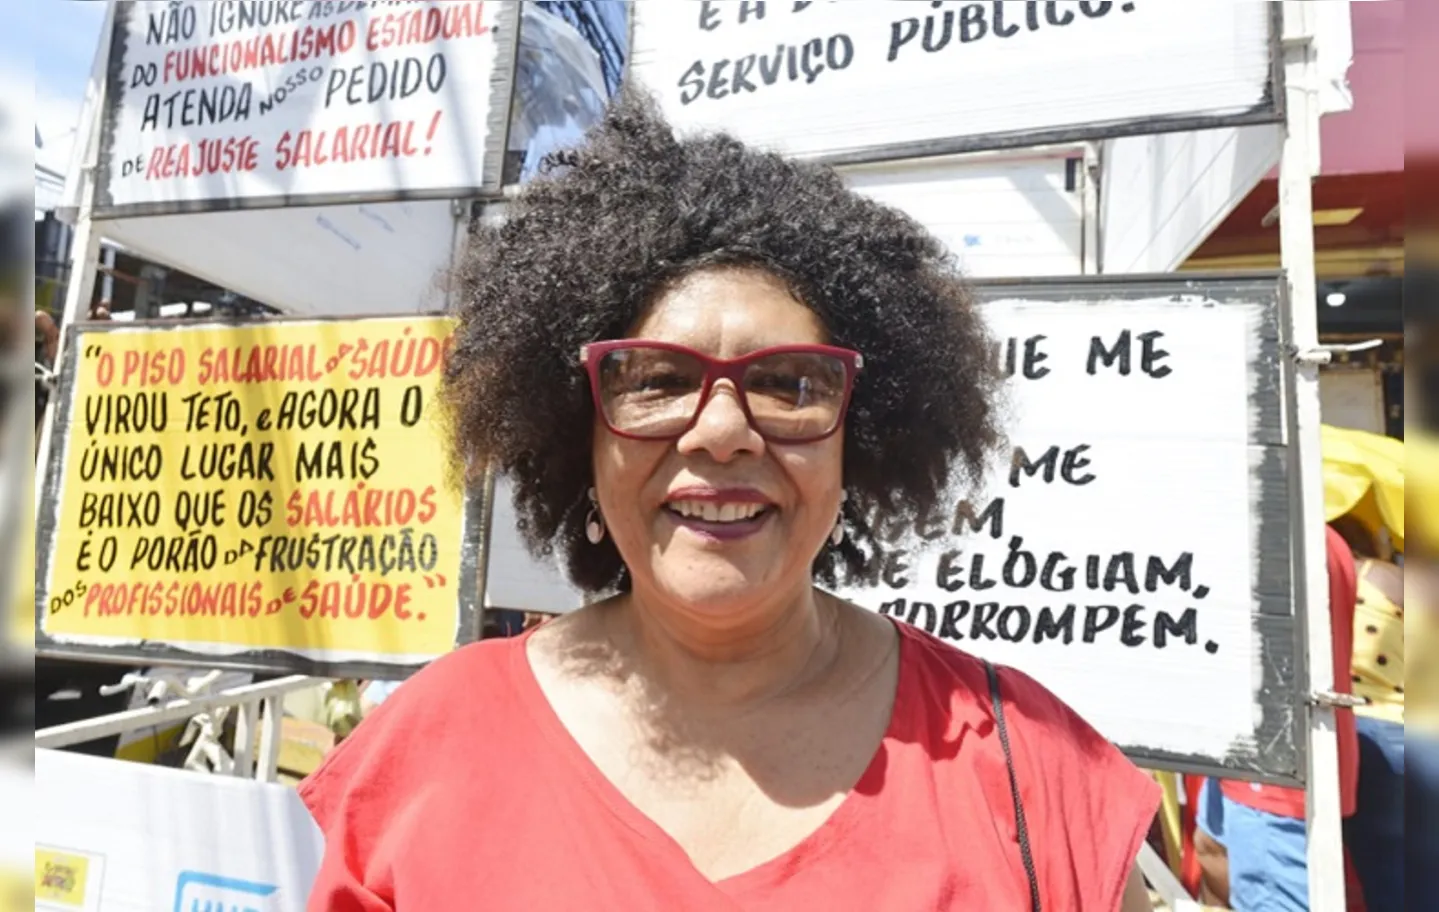 Vereadora Marta Rodrigues (PT) destacou ainda os protestos relacionados ao ex-presidente da República, Jair Bolsonaro